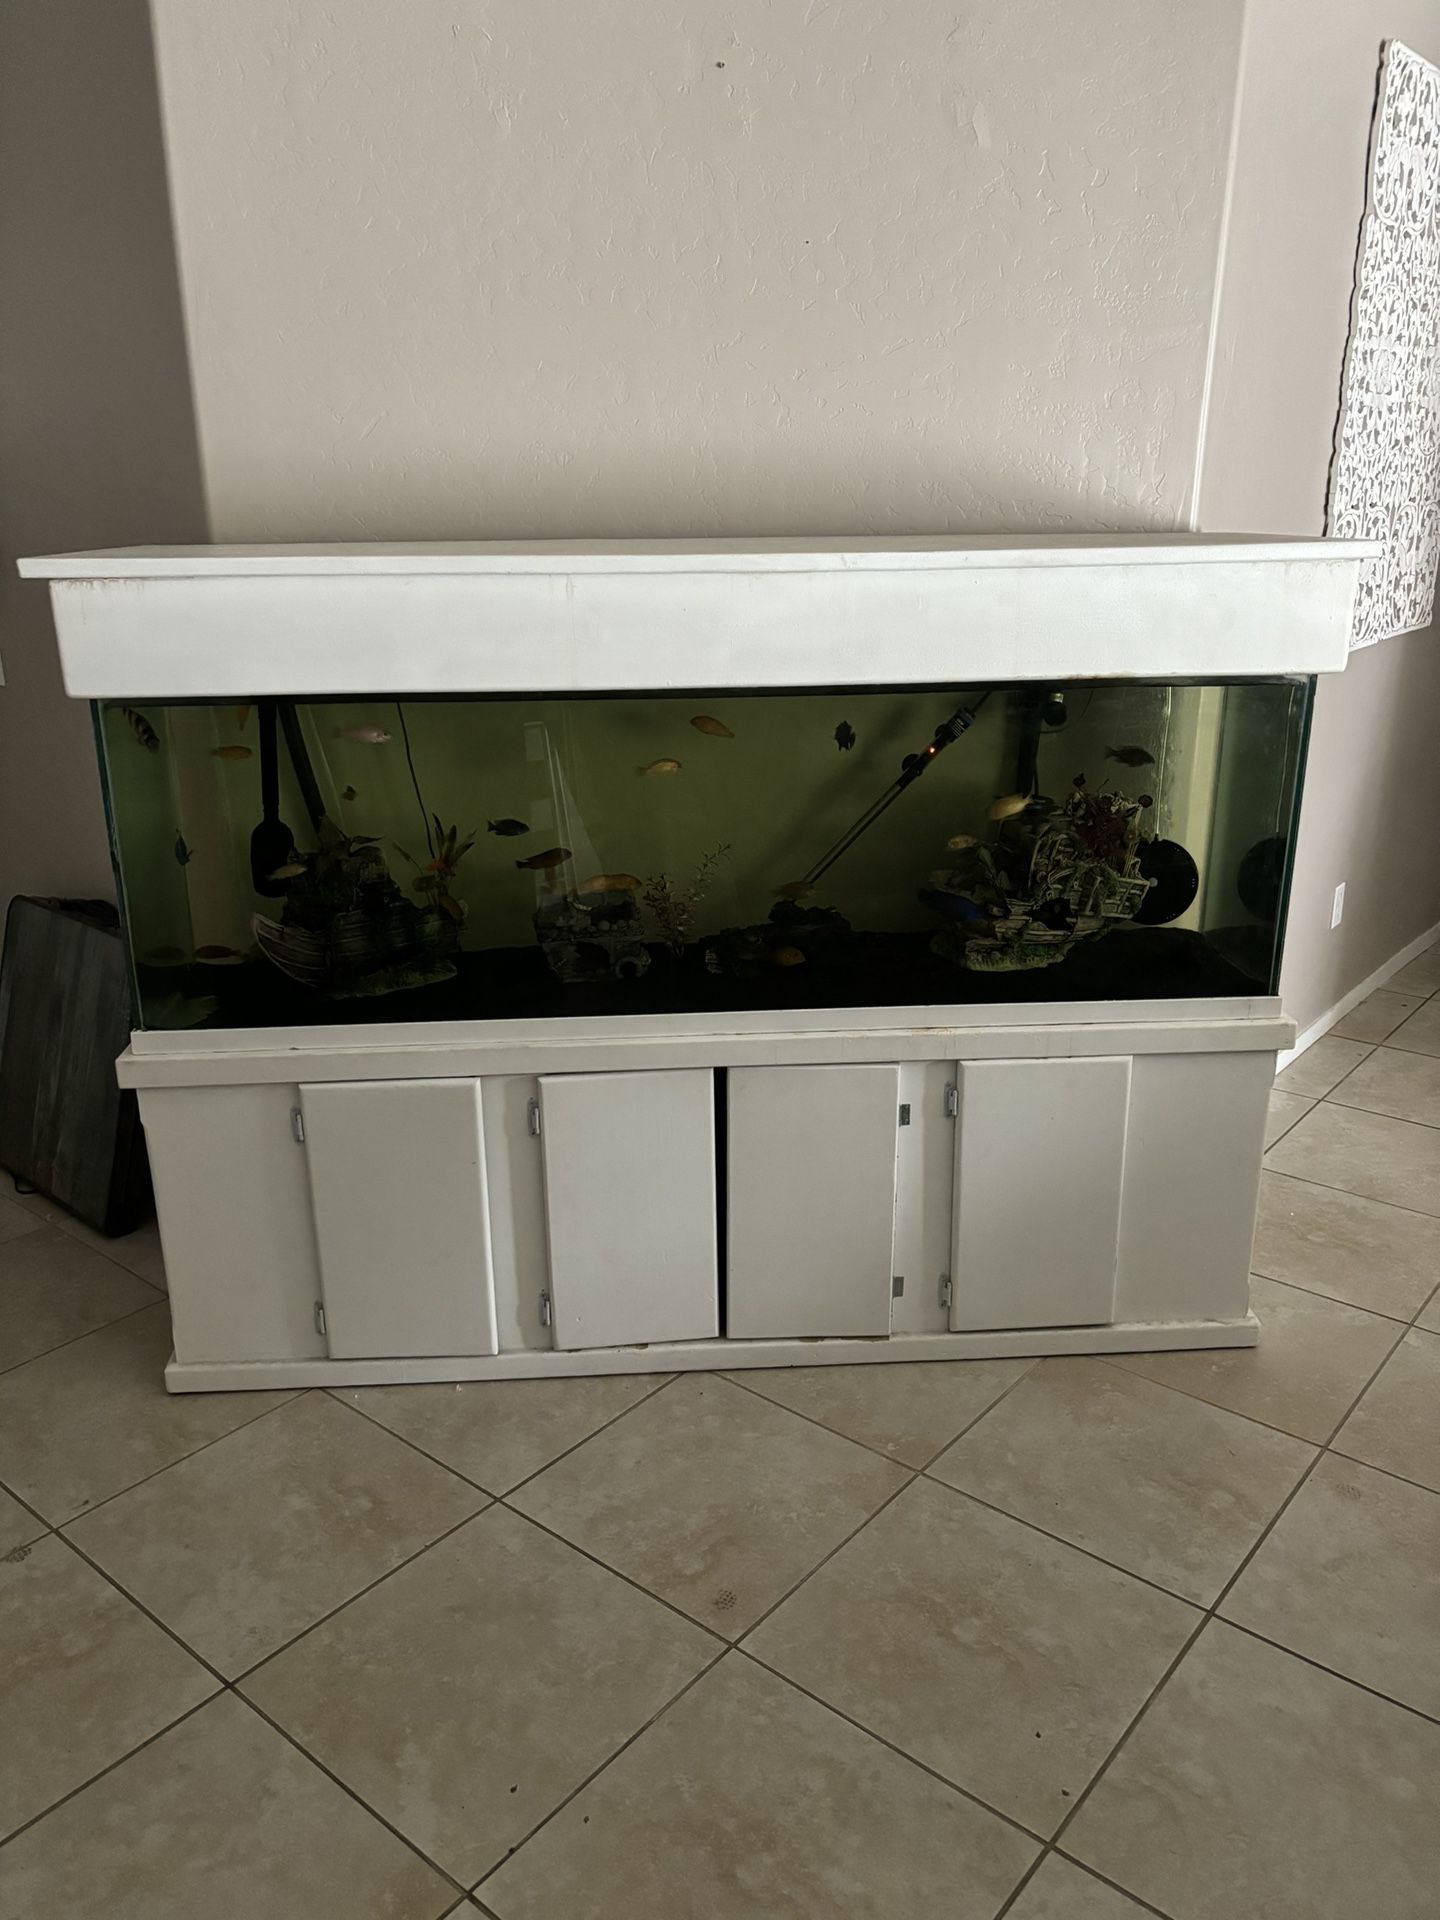 150 Gallon Fish Tank